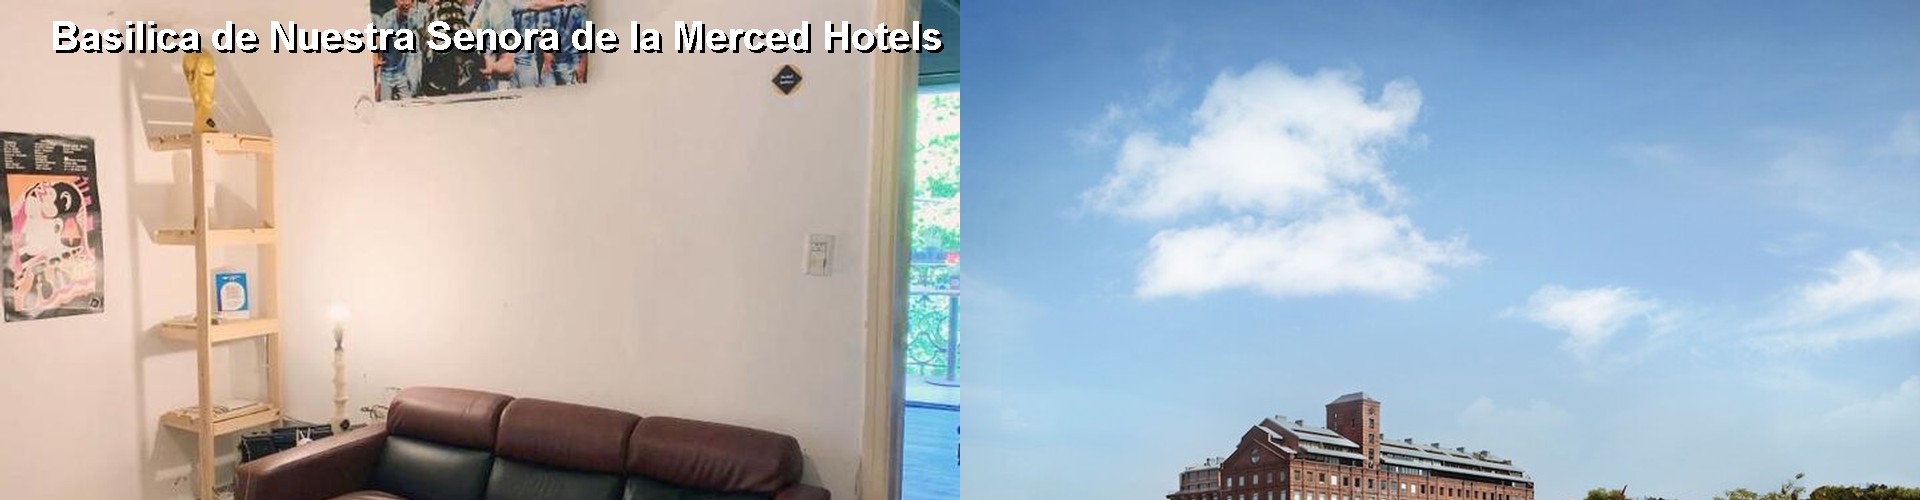 5 Best Hotels near Basilica de Nuestra Senora de la Merced